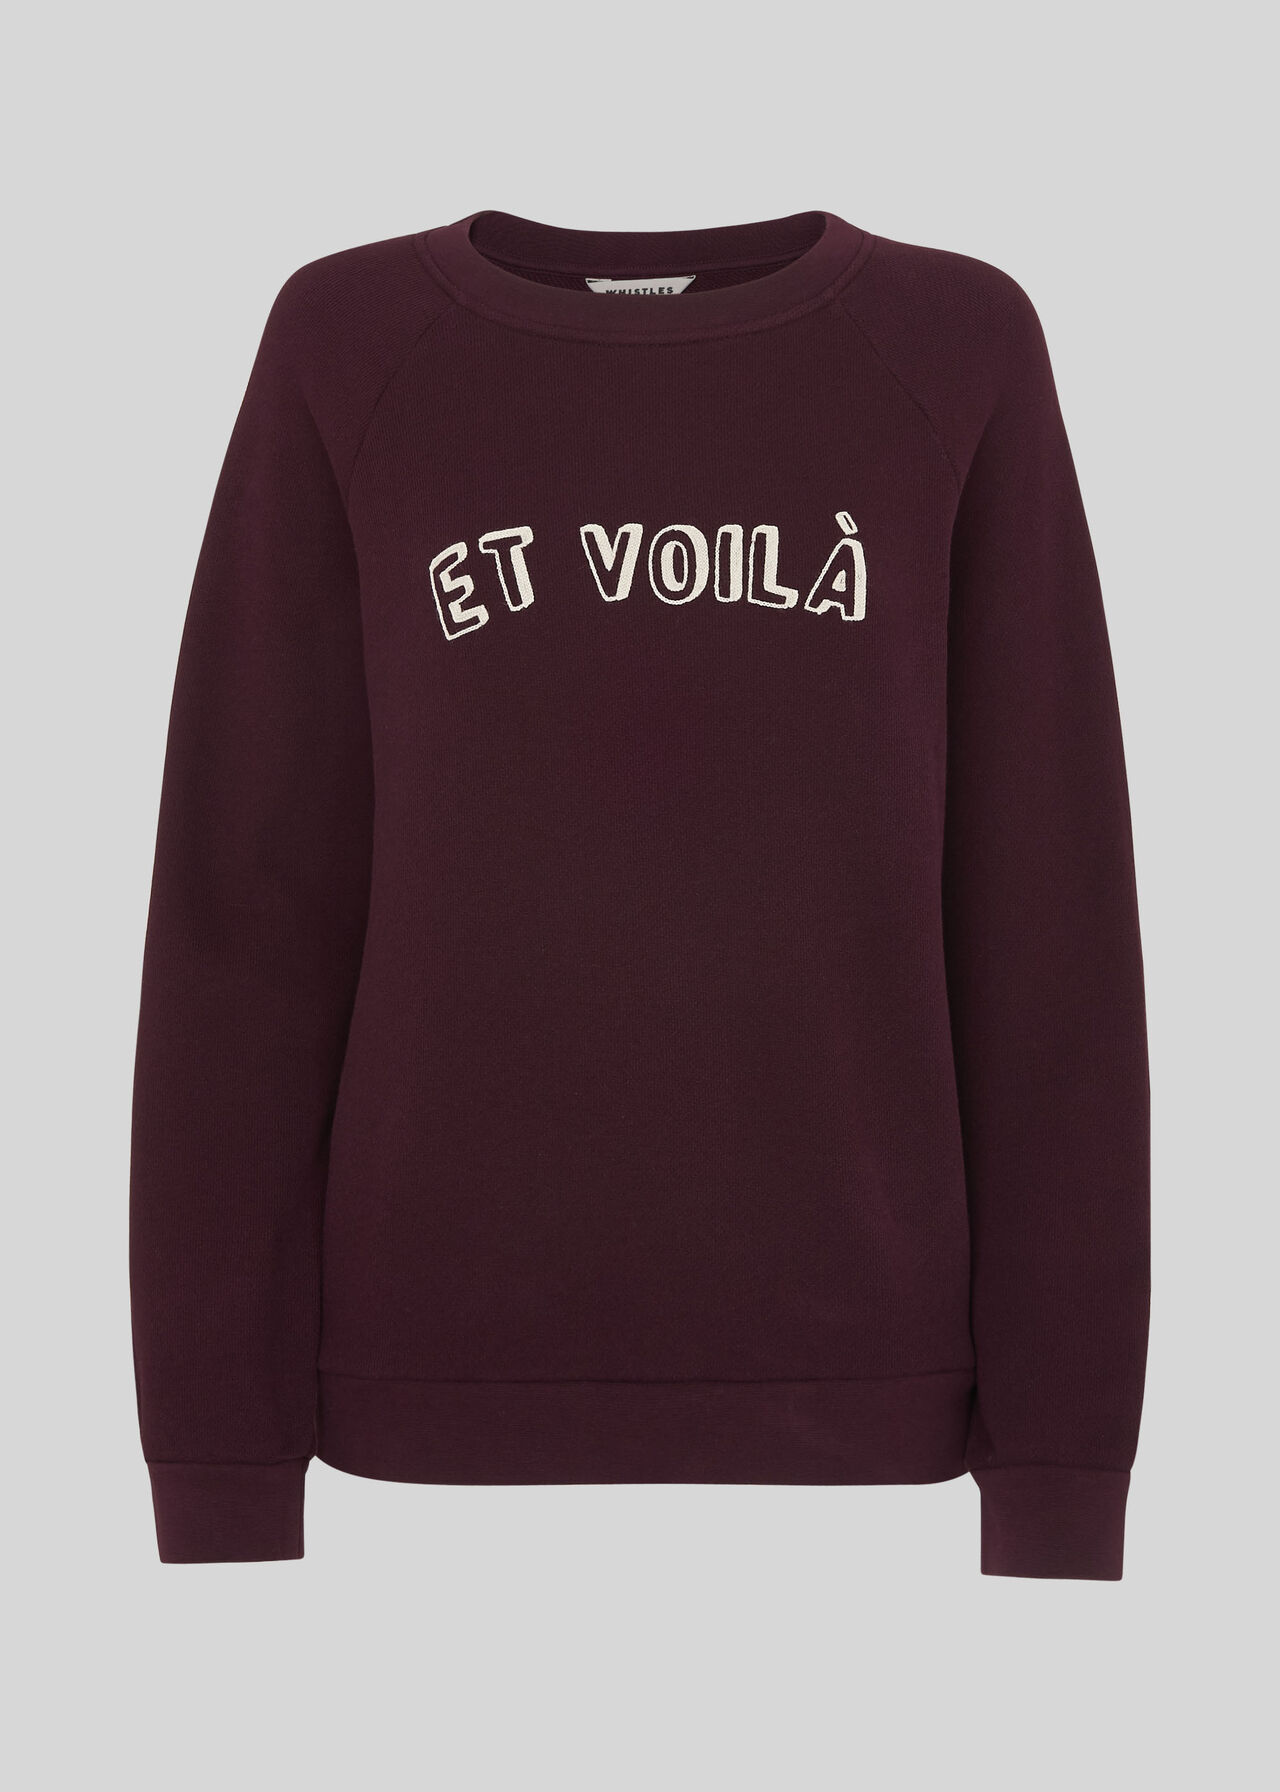 Et Voila Logo Sweatshirt Burgundy